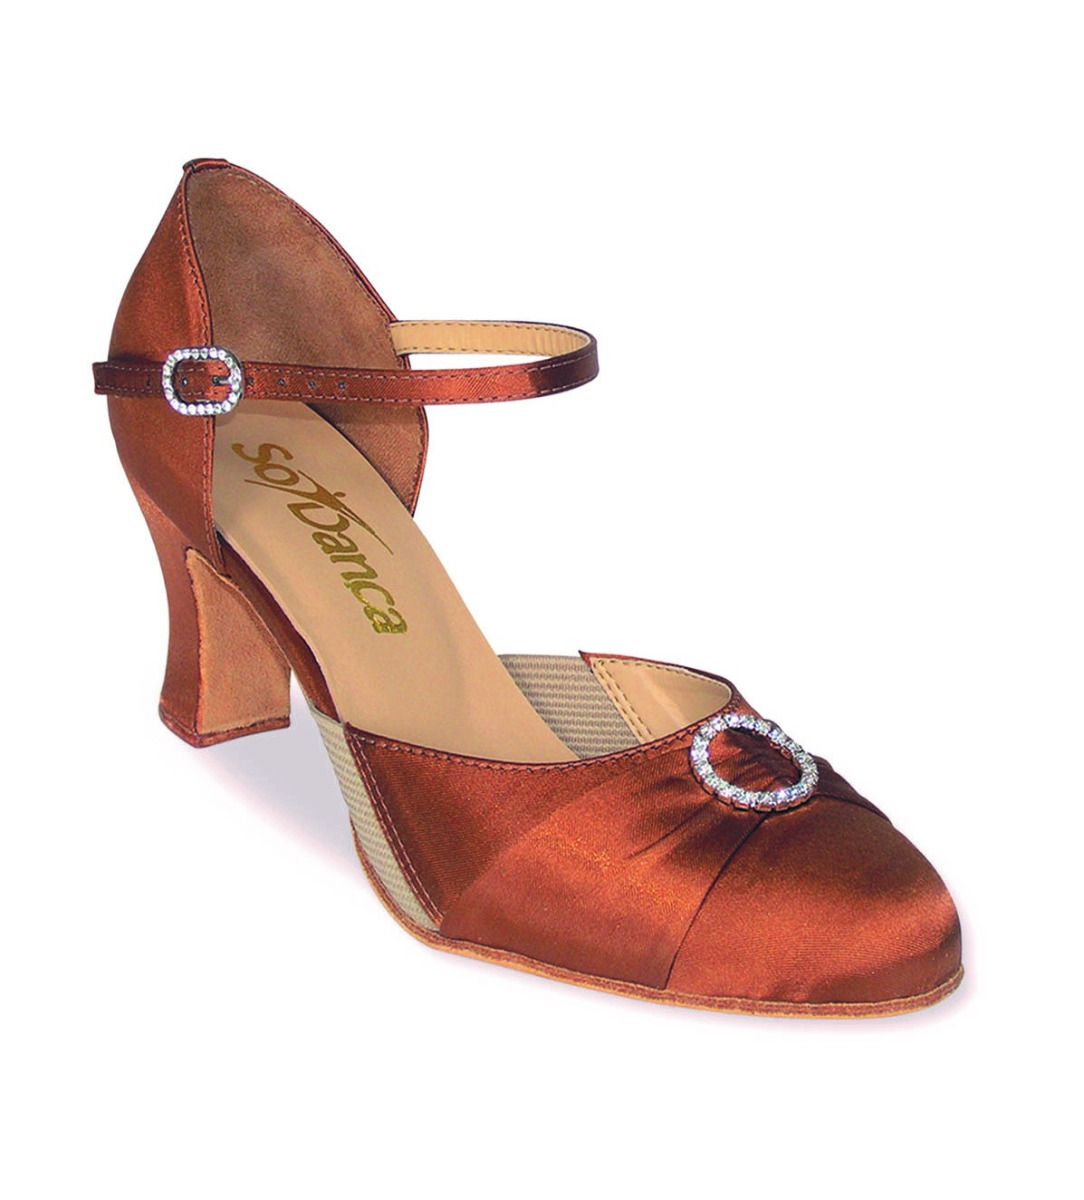 2.5" Heel Strappy Ballroom Shoe with Center Rhinestone Detail - Final Sale